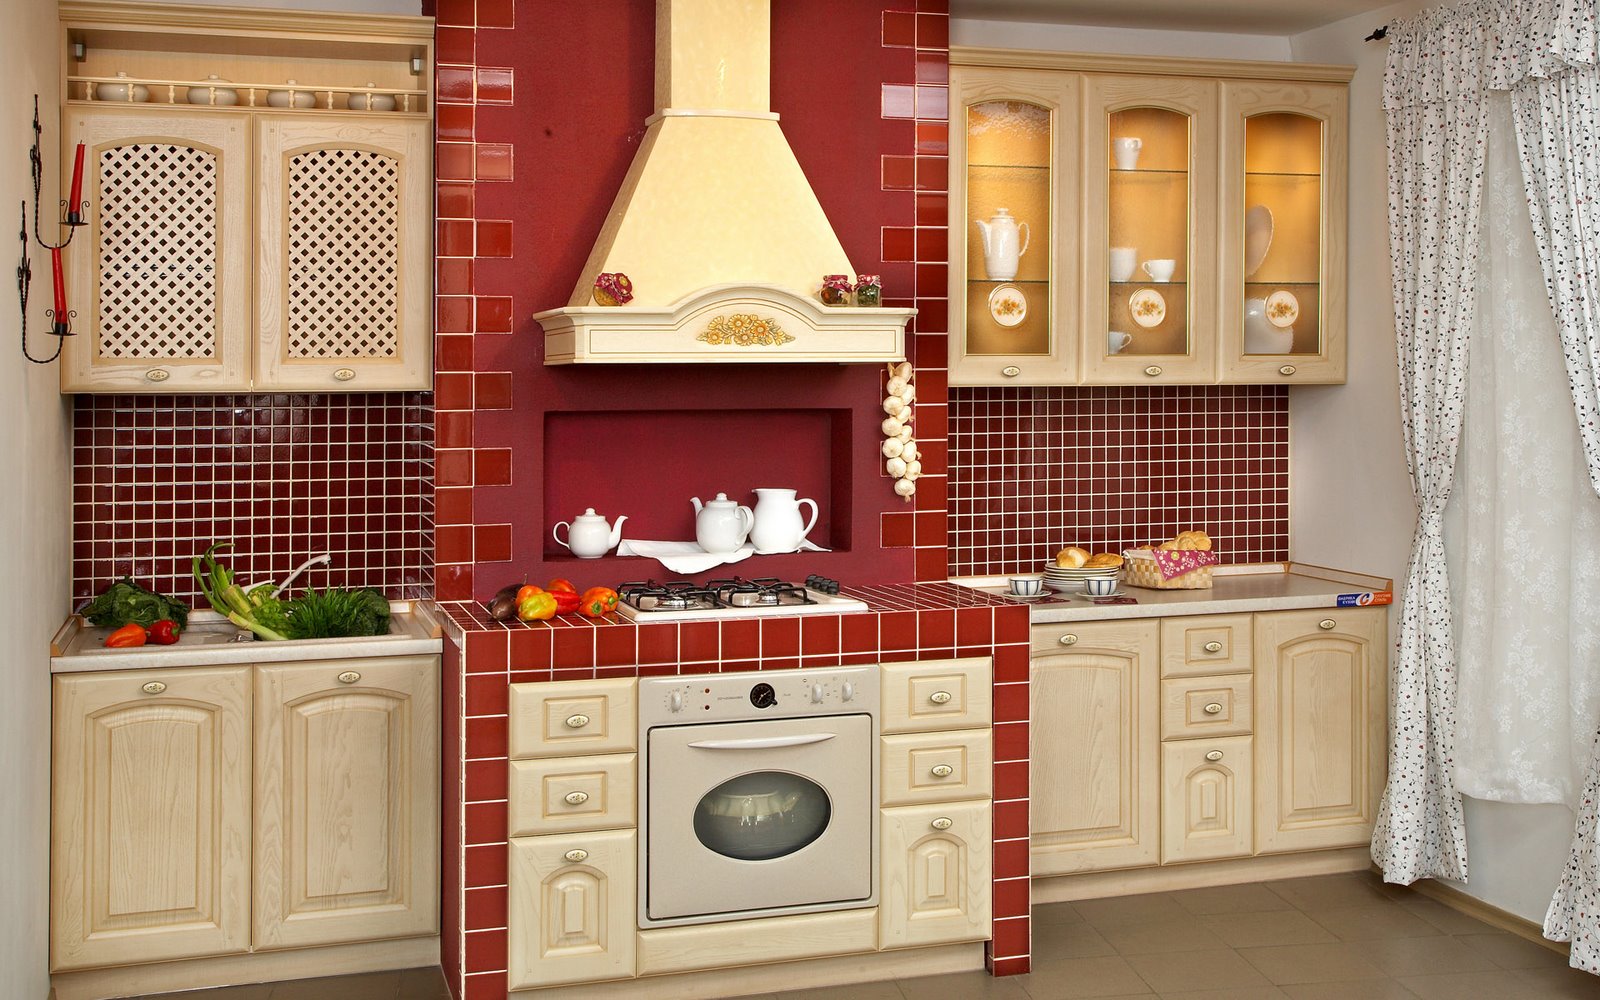 Luxury Home Interior Design: Red Color Kitchen Design